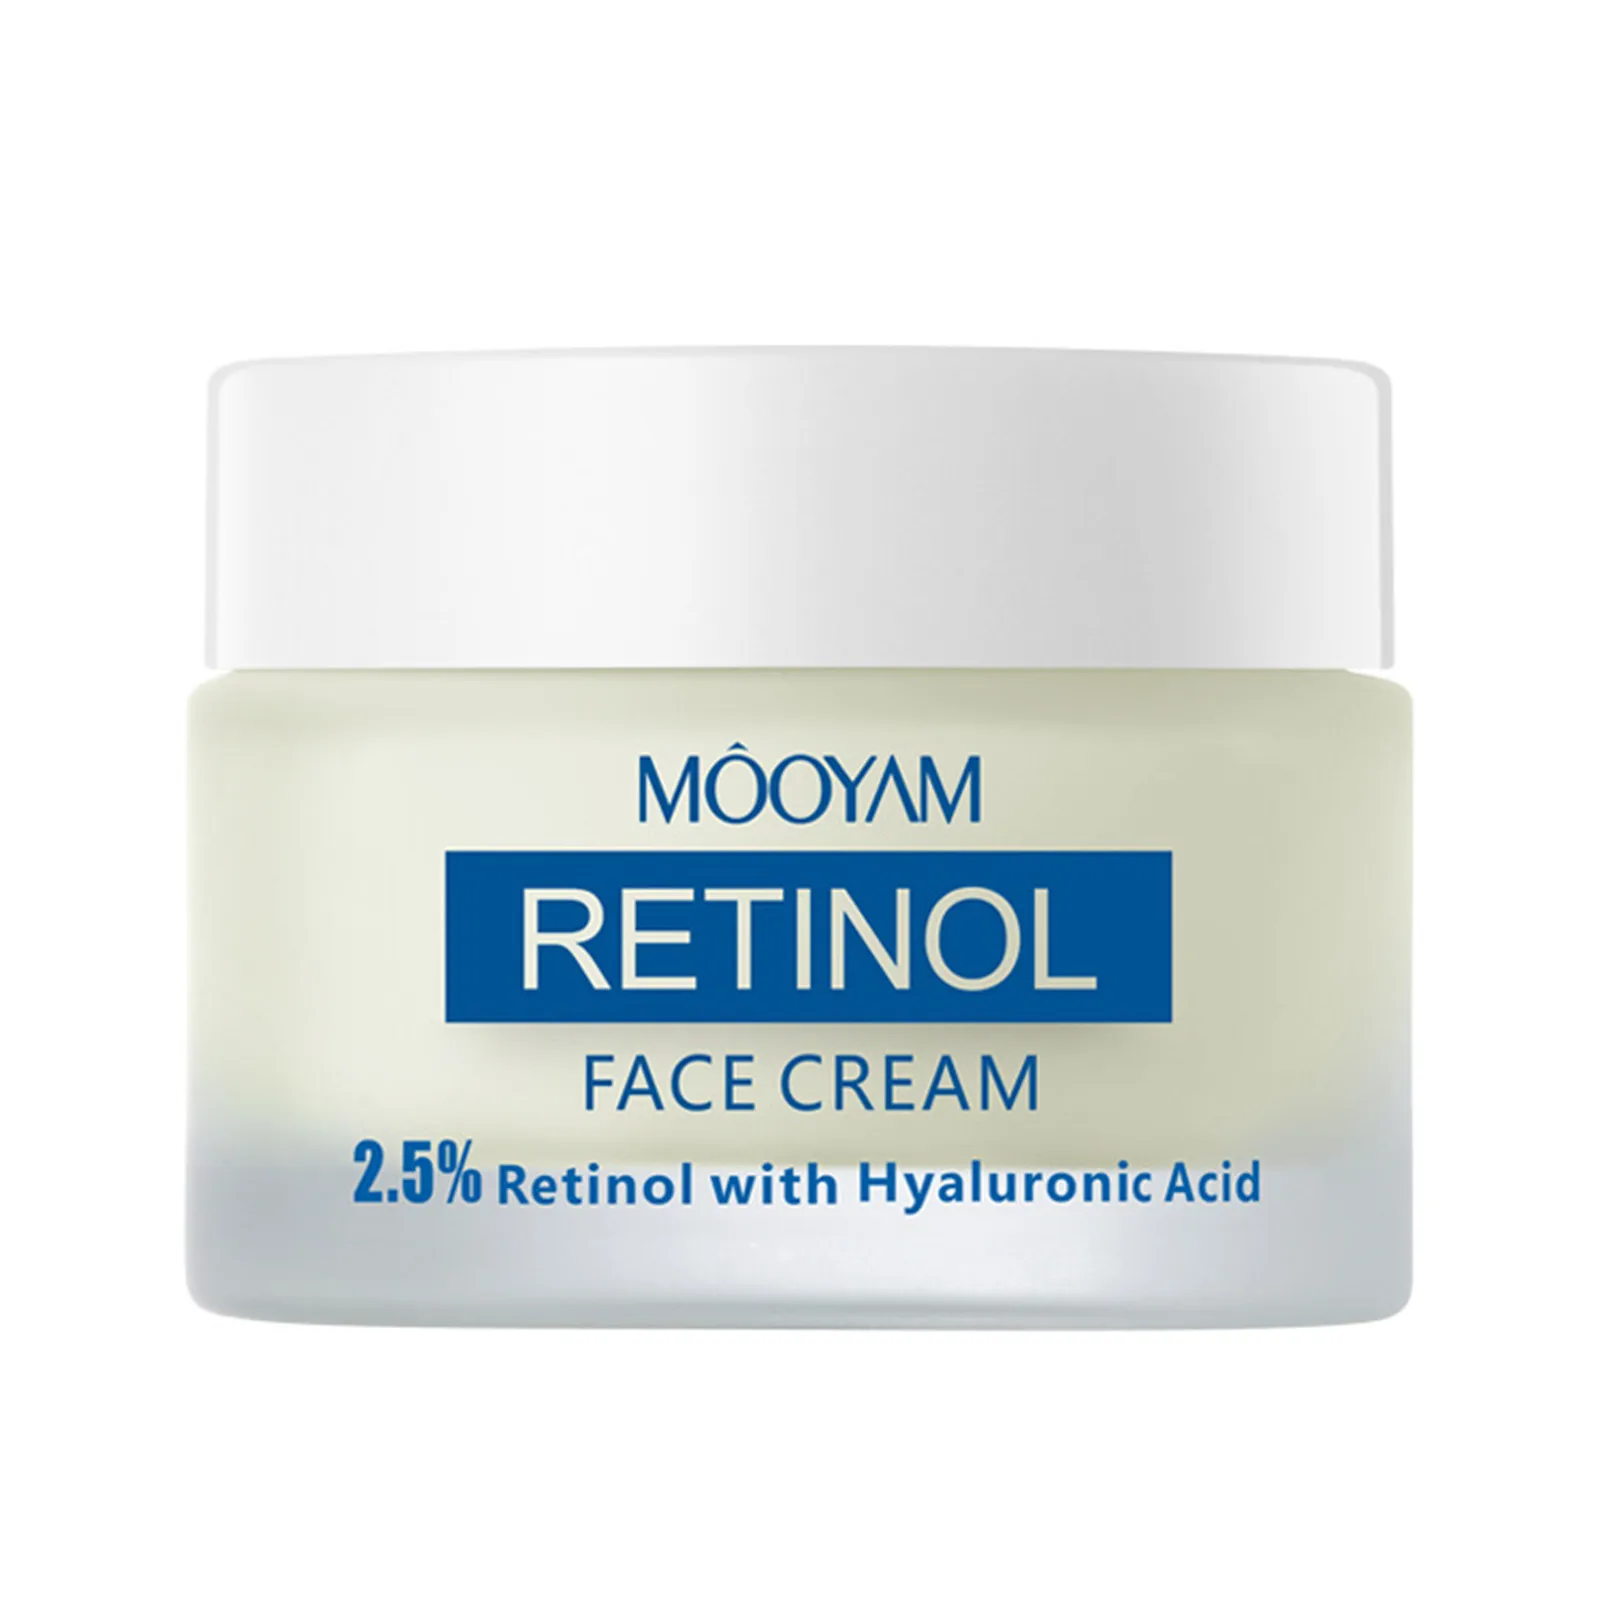 

Retinol Face Cream Anti-Aging Moisturizer Remove Wrinkle Firming Lifting Whitening Brightening Moisturizing Facial Skin Care